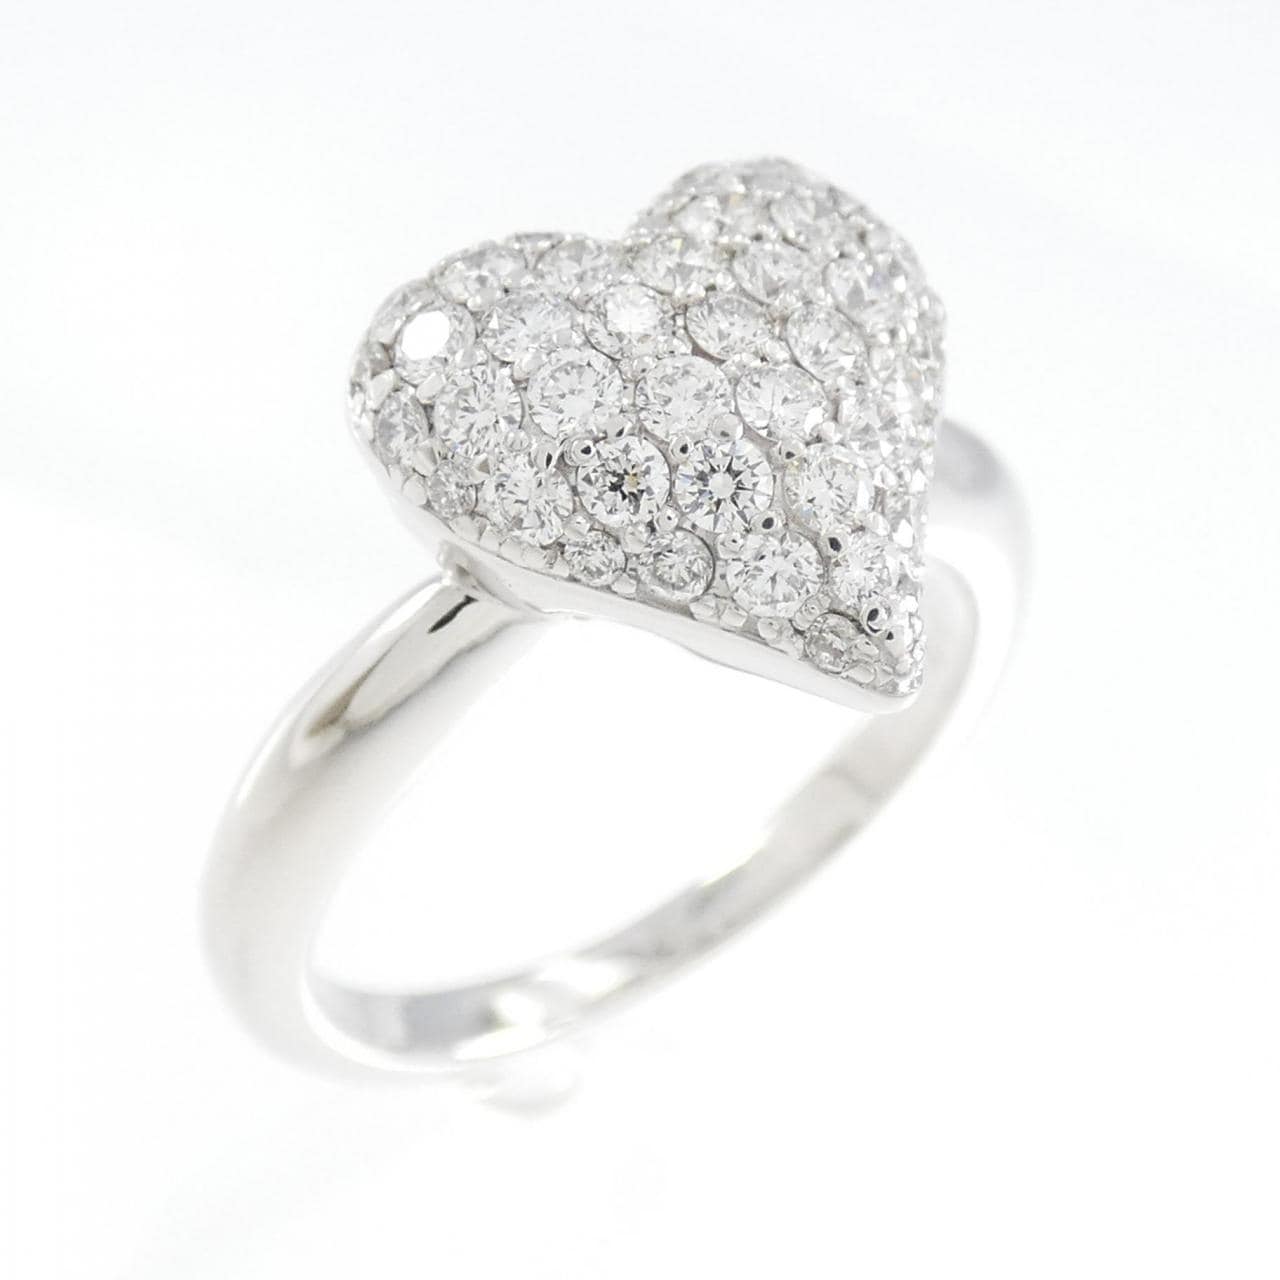 K18WG Heart Pave Diamond Ring 0.70CT